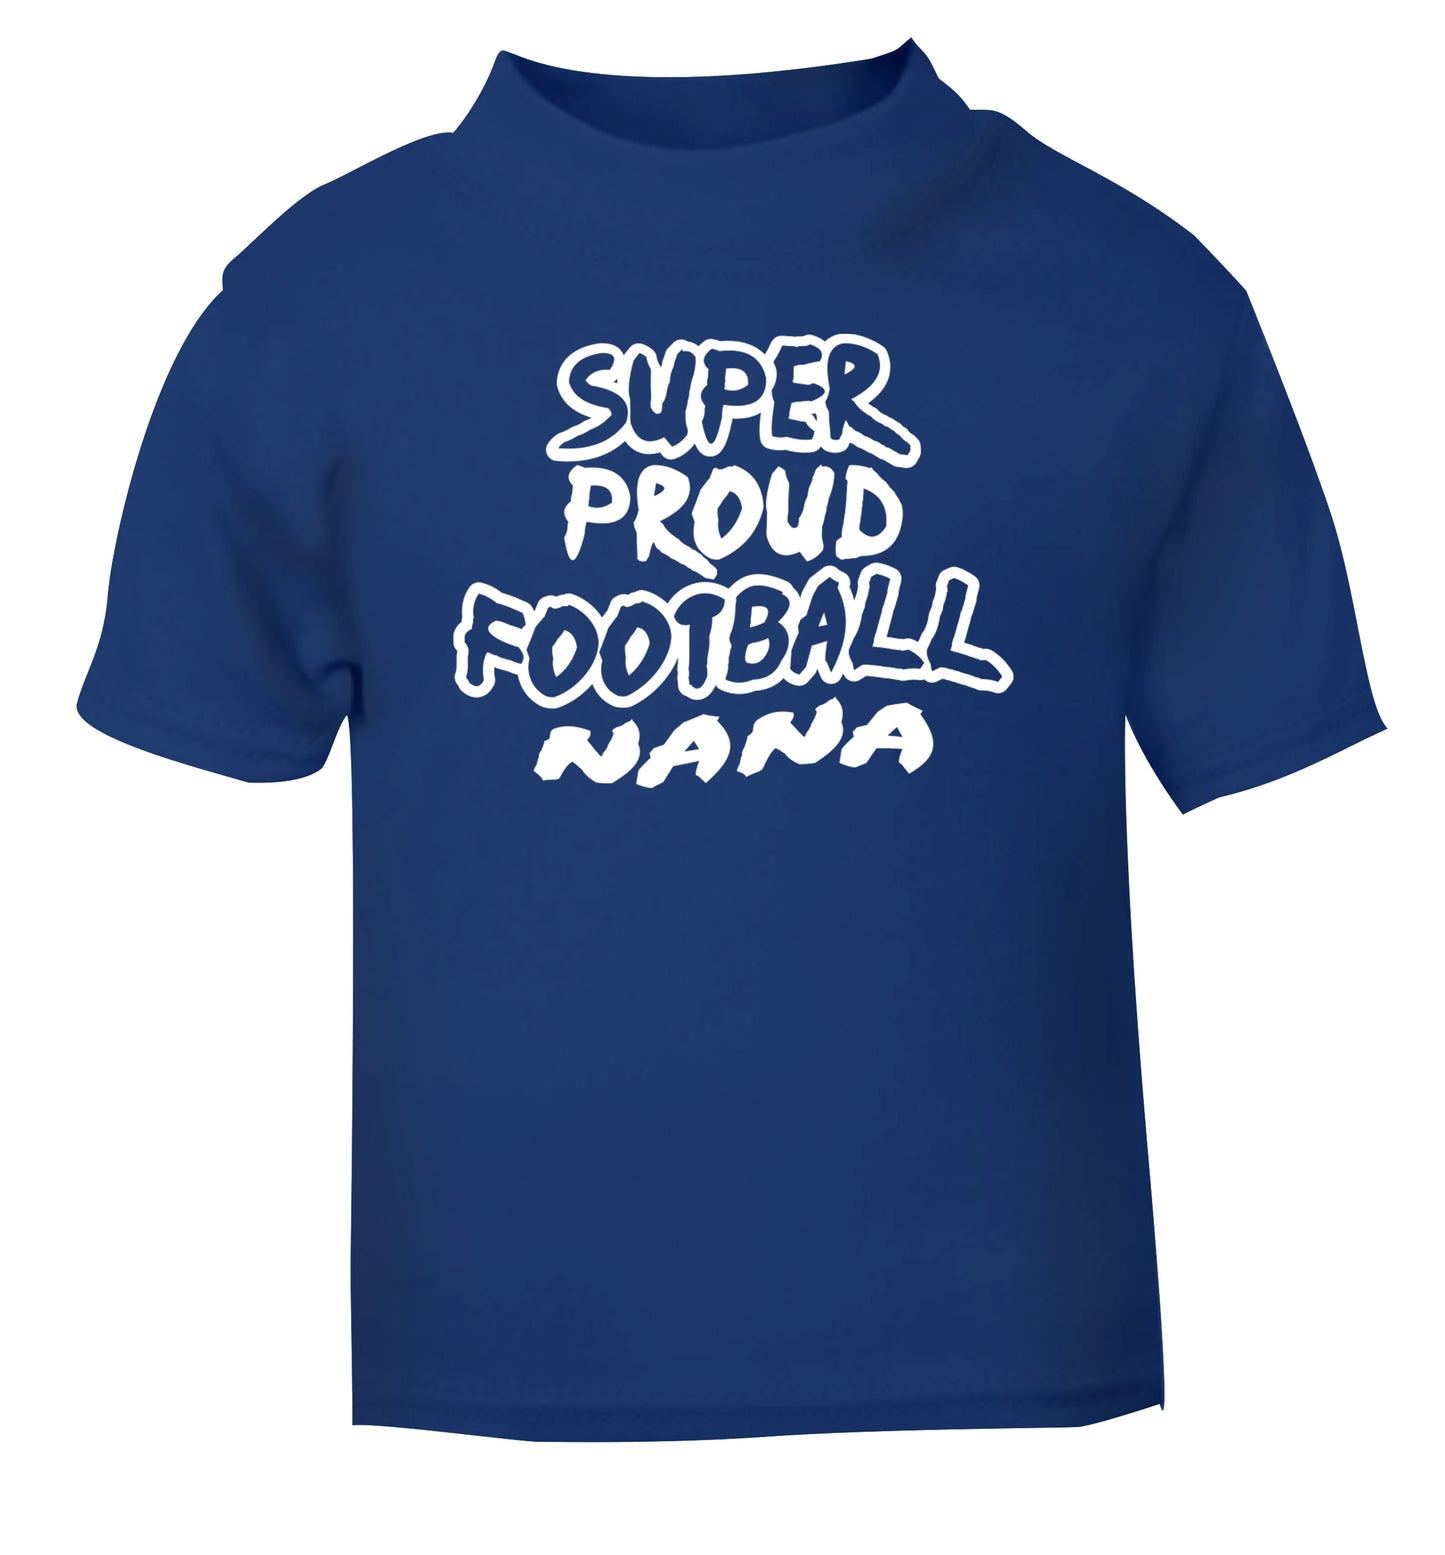 Super proud football nana blue Baby Toddler Tshirt 2 Years